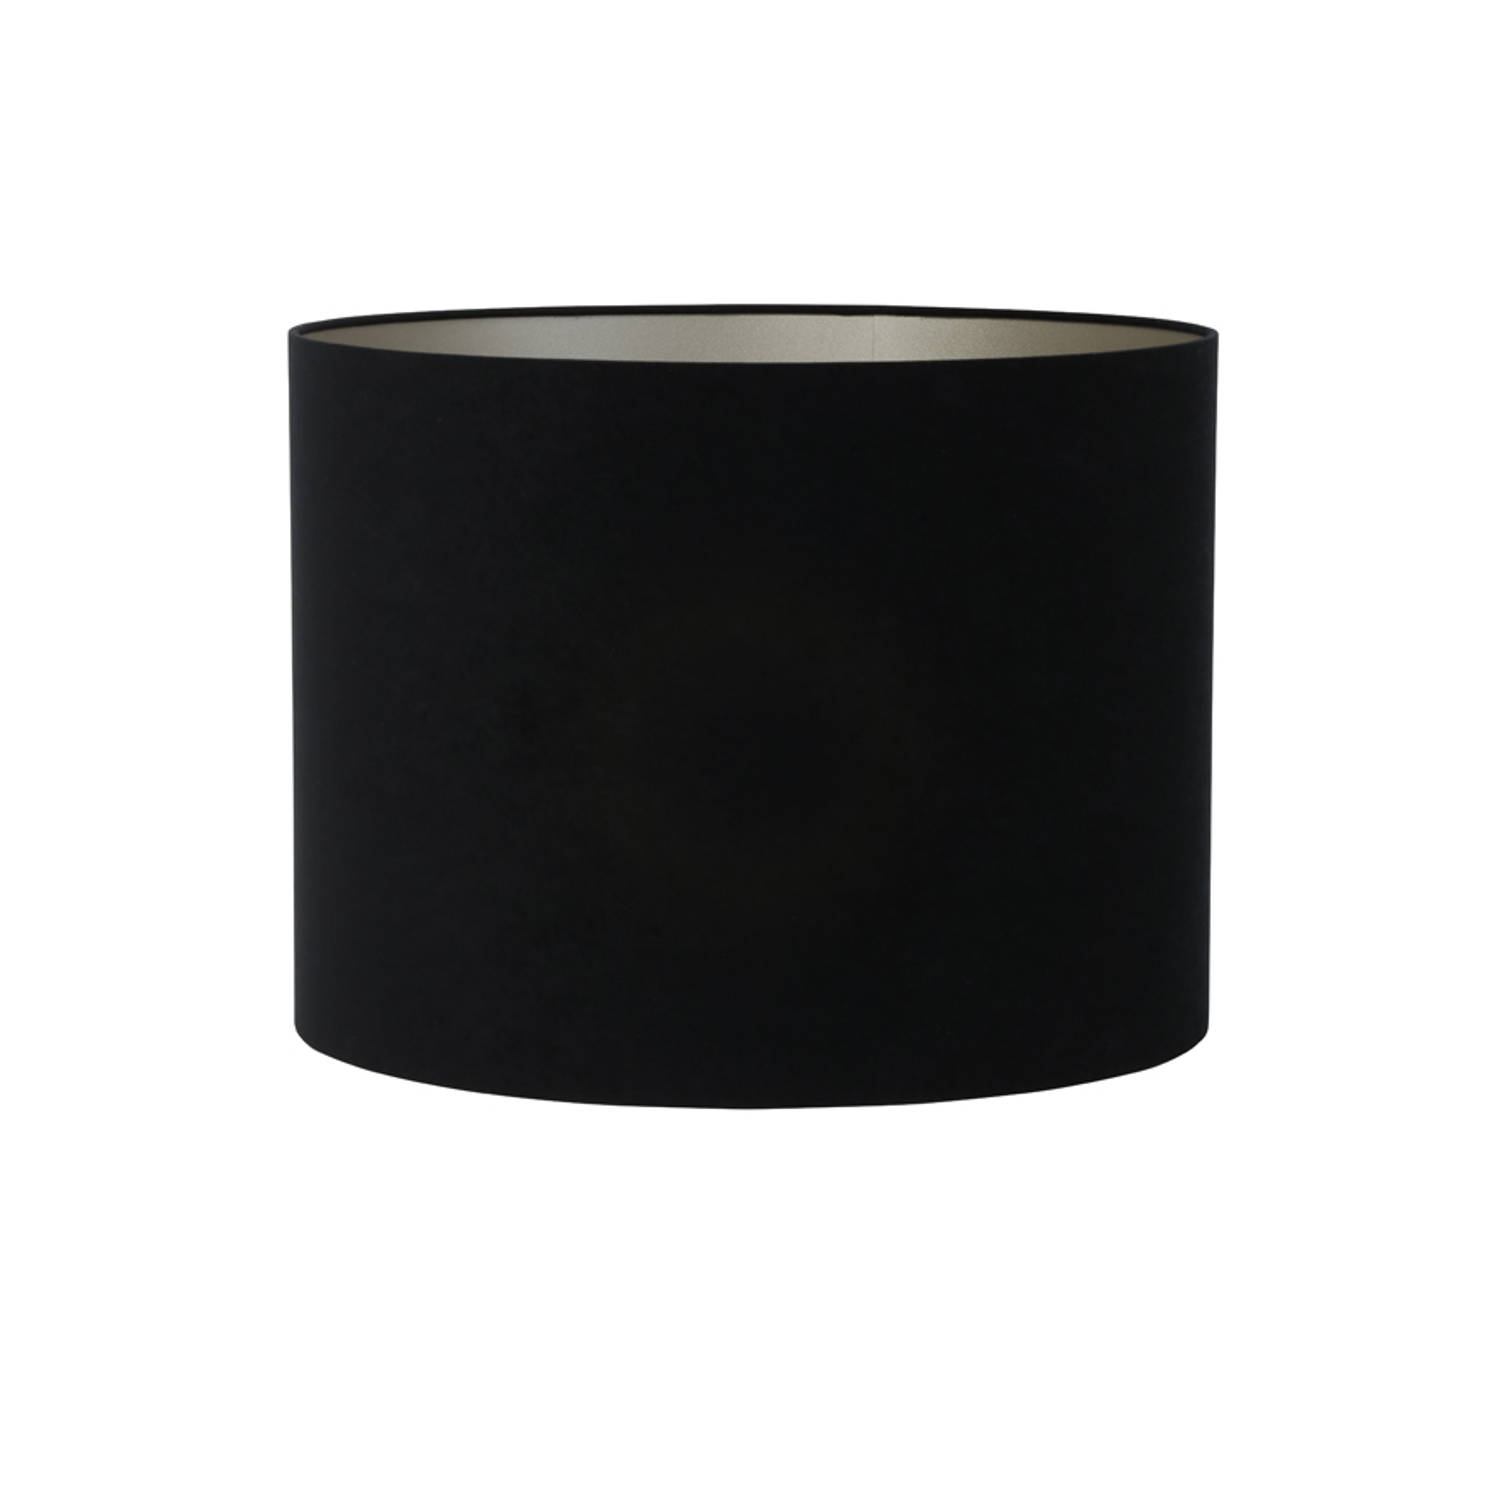 Kap cilinder 50-50-38 cm VELOURS zwart-taupe Light & Living